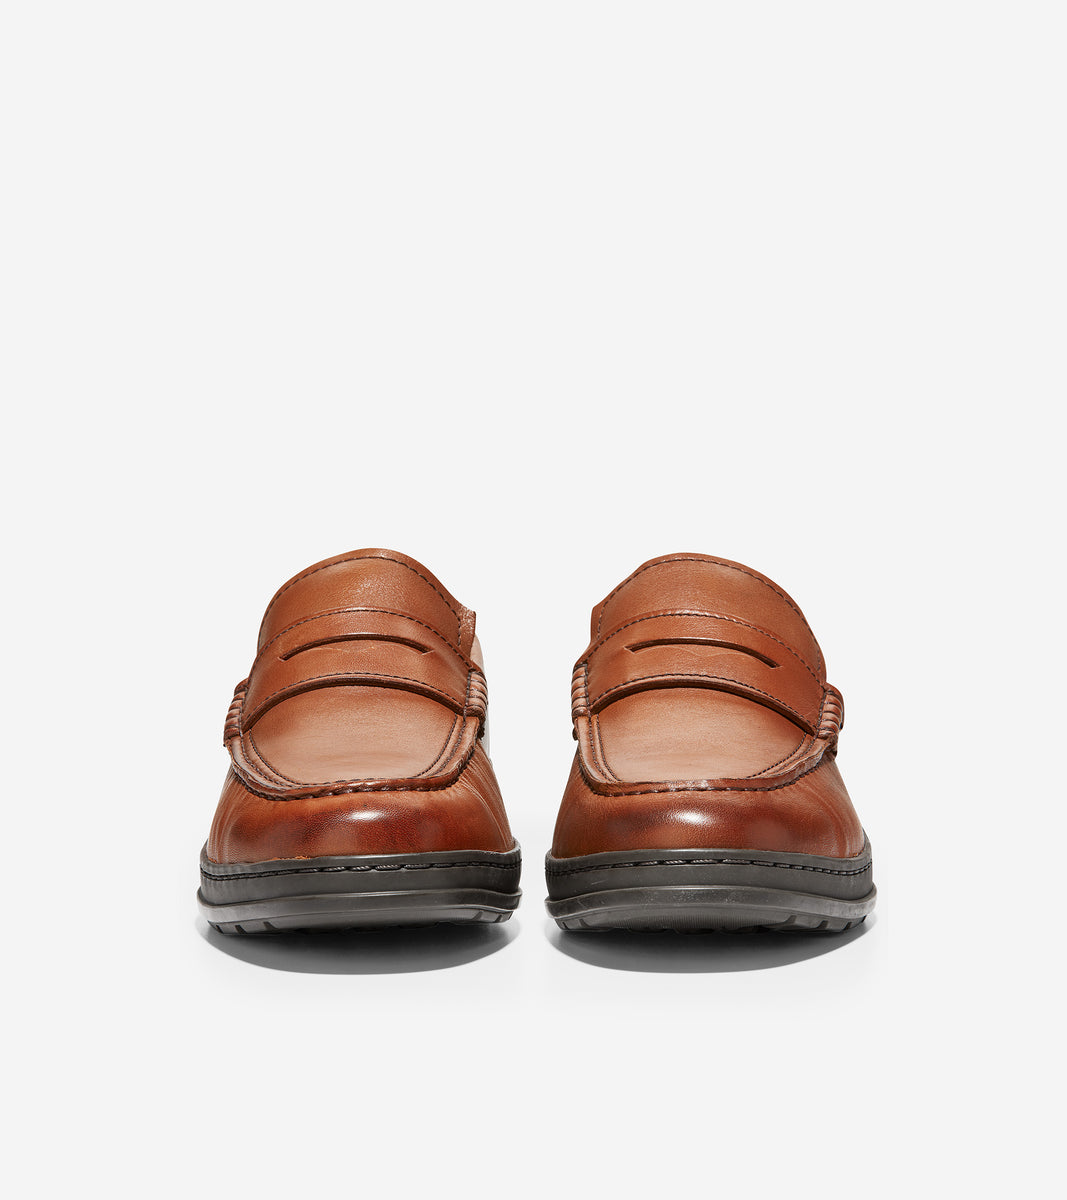 ColeHaan-Hamlin Traveler Penny Loafer-c30932-British Tan Handstain Leather